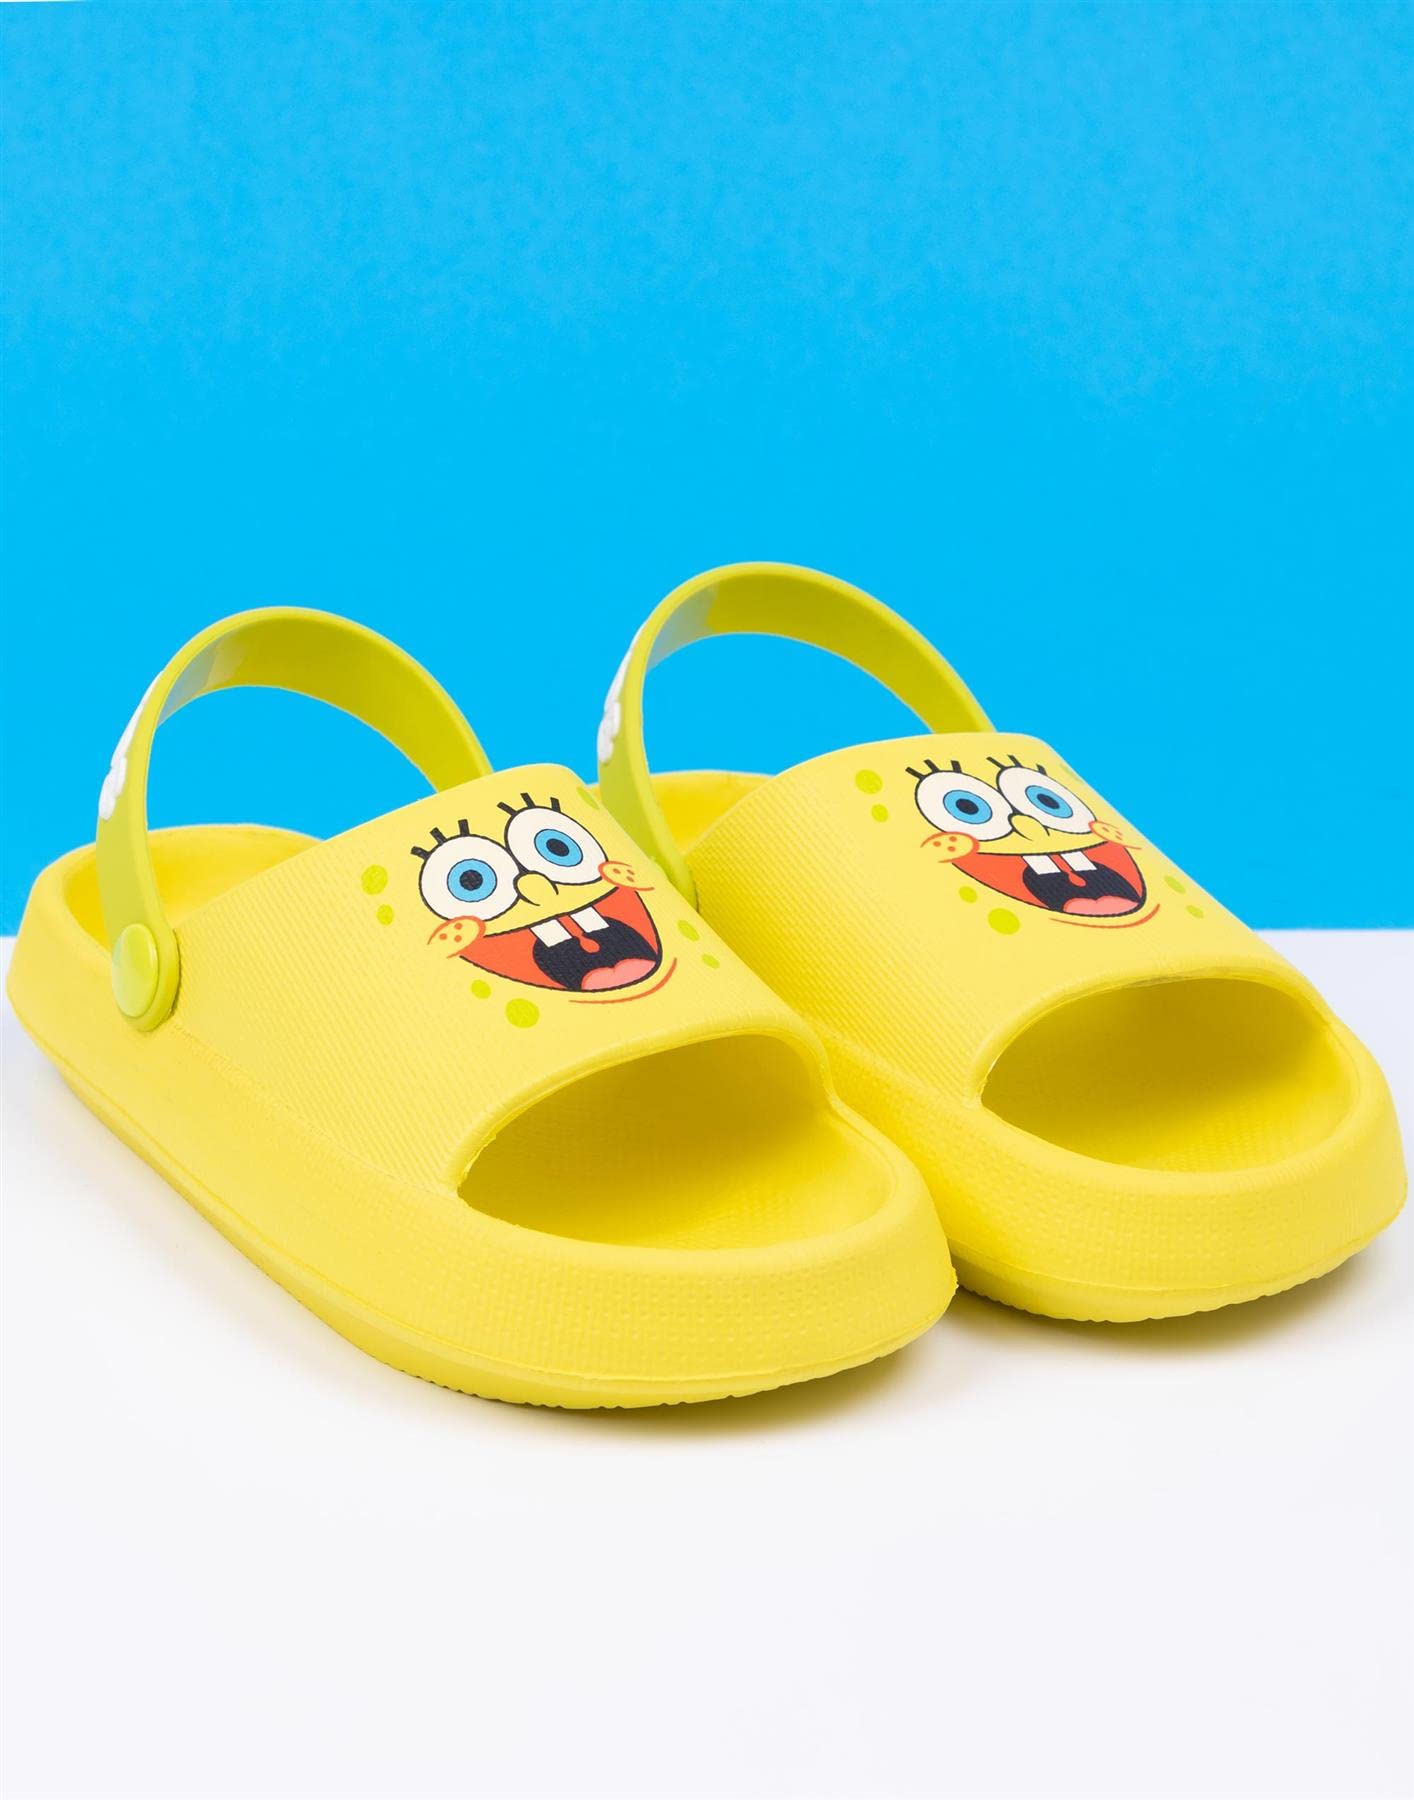 SpongeBob Squarepants Sliders Kids Yellow Animated Character Sandals